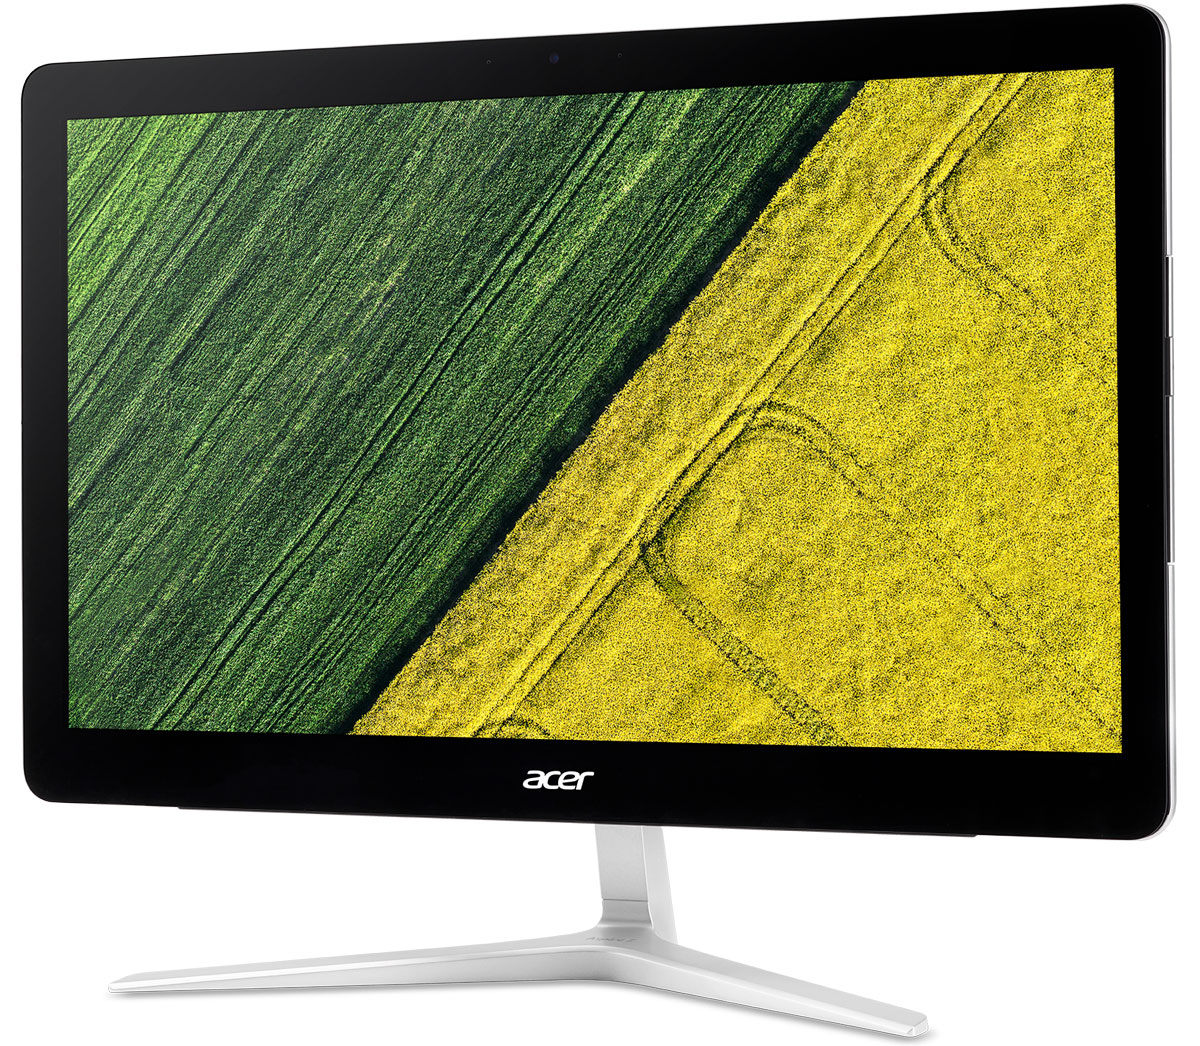 Acer Aspire Z24-880, Silver моноблок (DQ.B8TER.016)